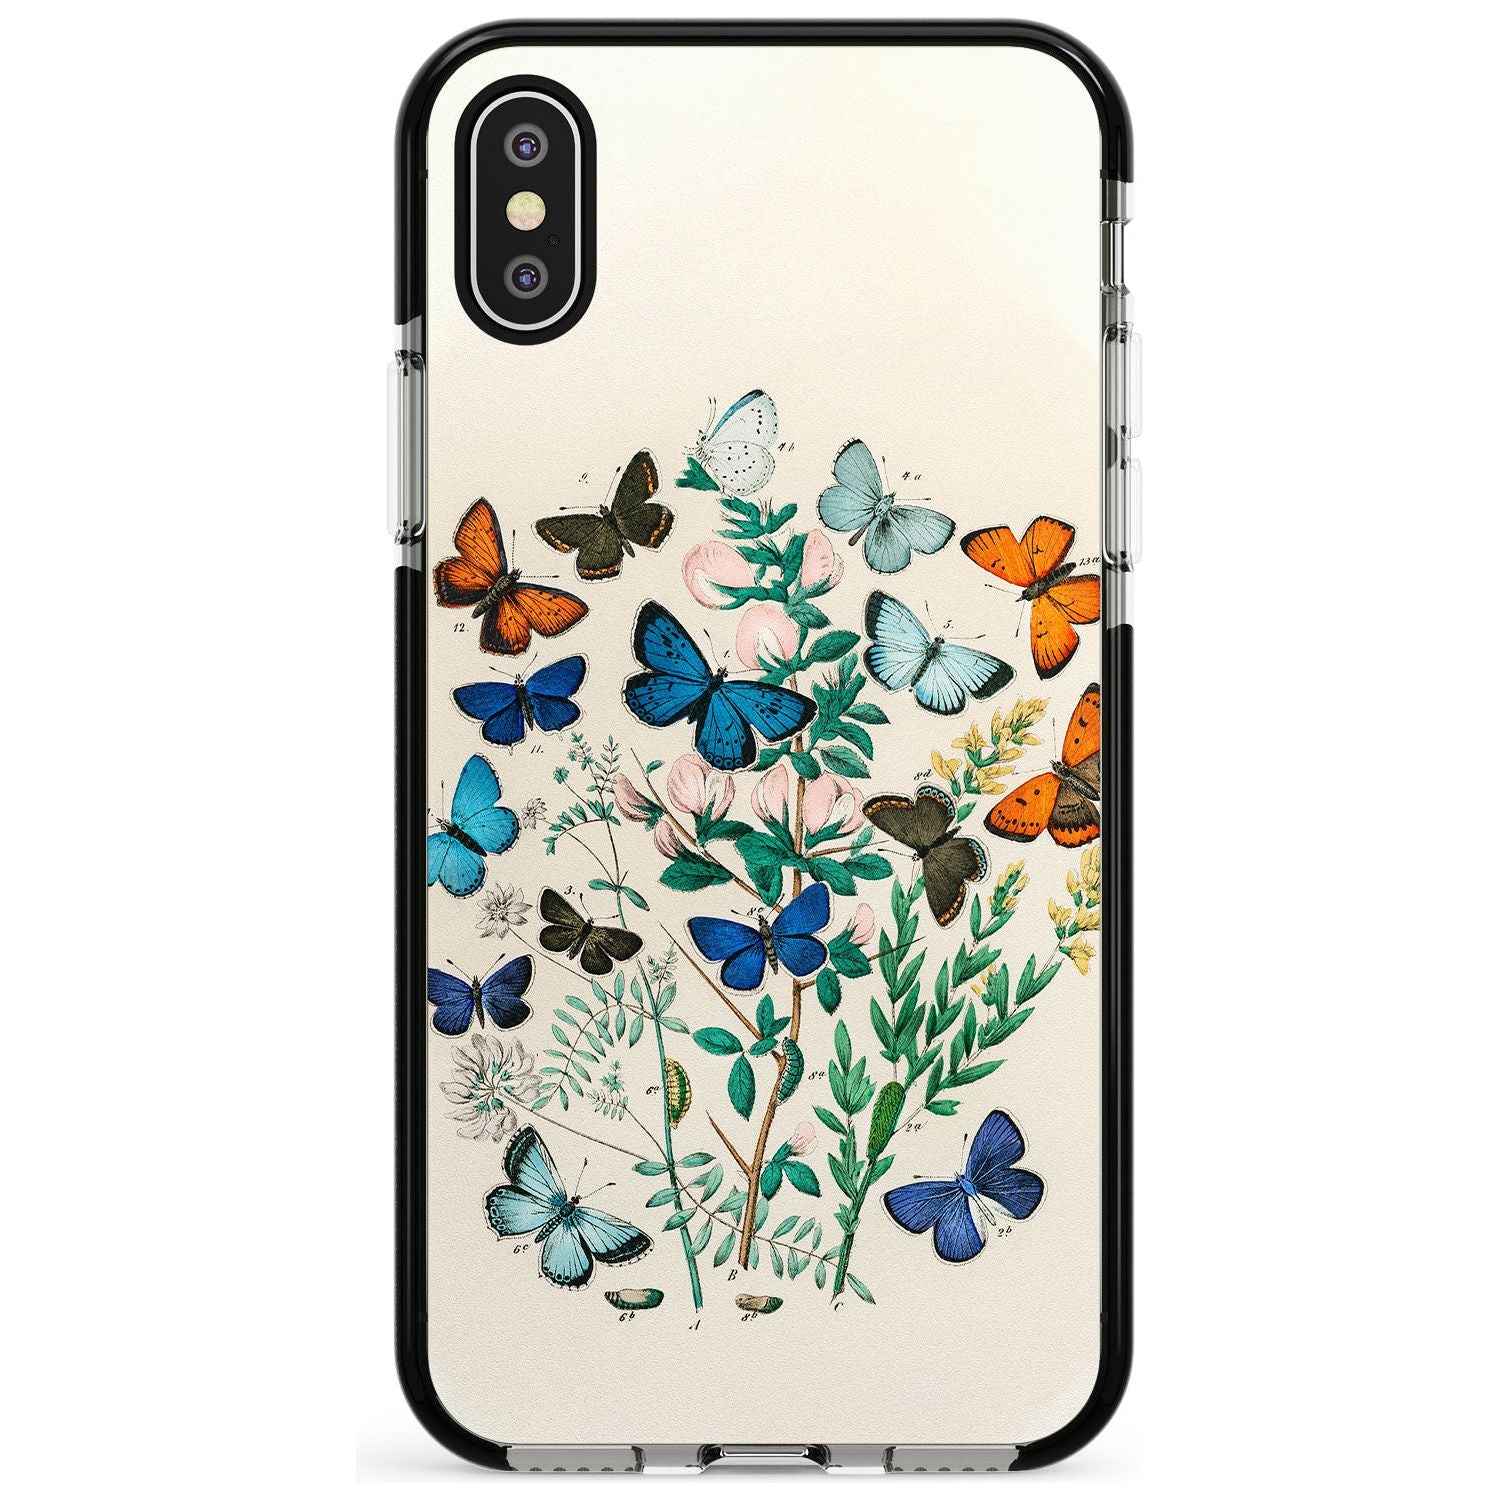 European Butterflies Black Impact Phone Case for iPhone X XS Max XR